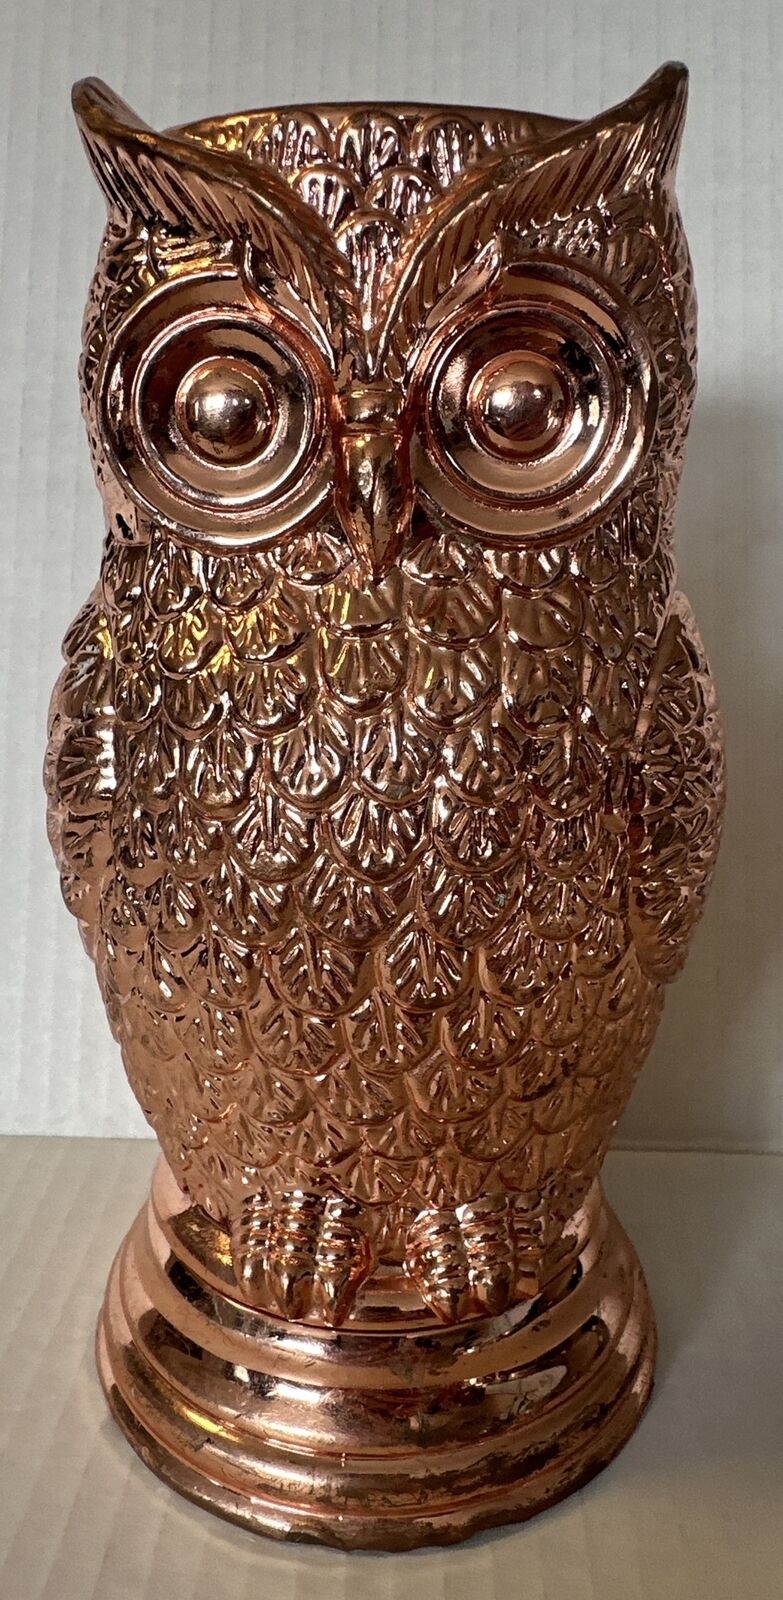 Absolut Elyx Copper Owl Mug Metal Vase Cocktail Vessel Advertising READ